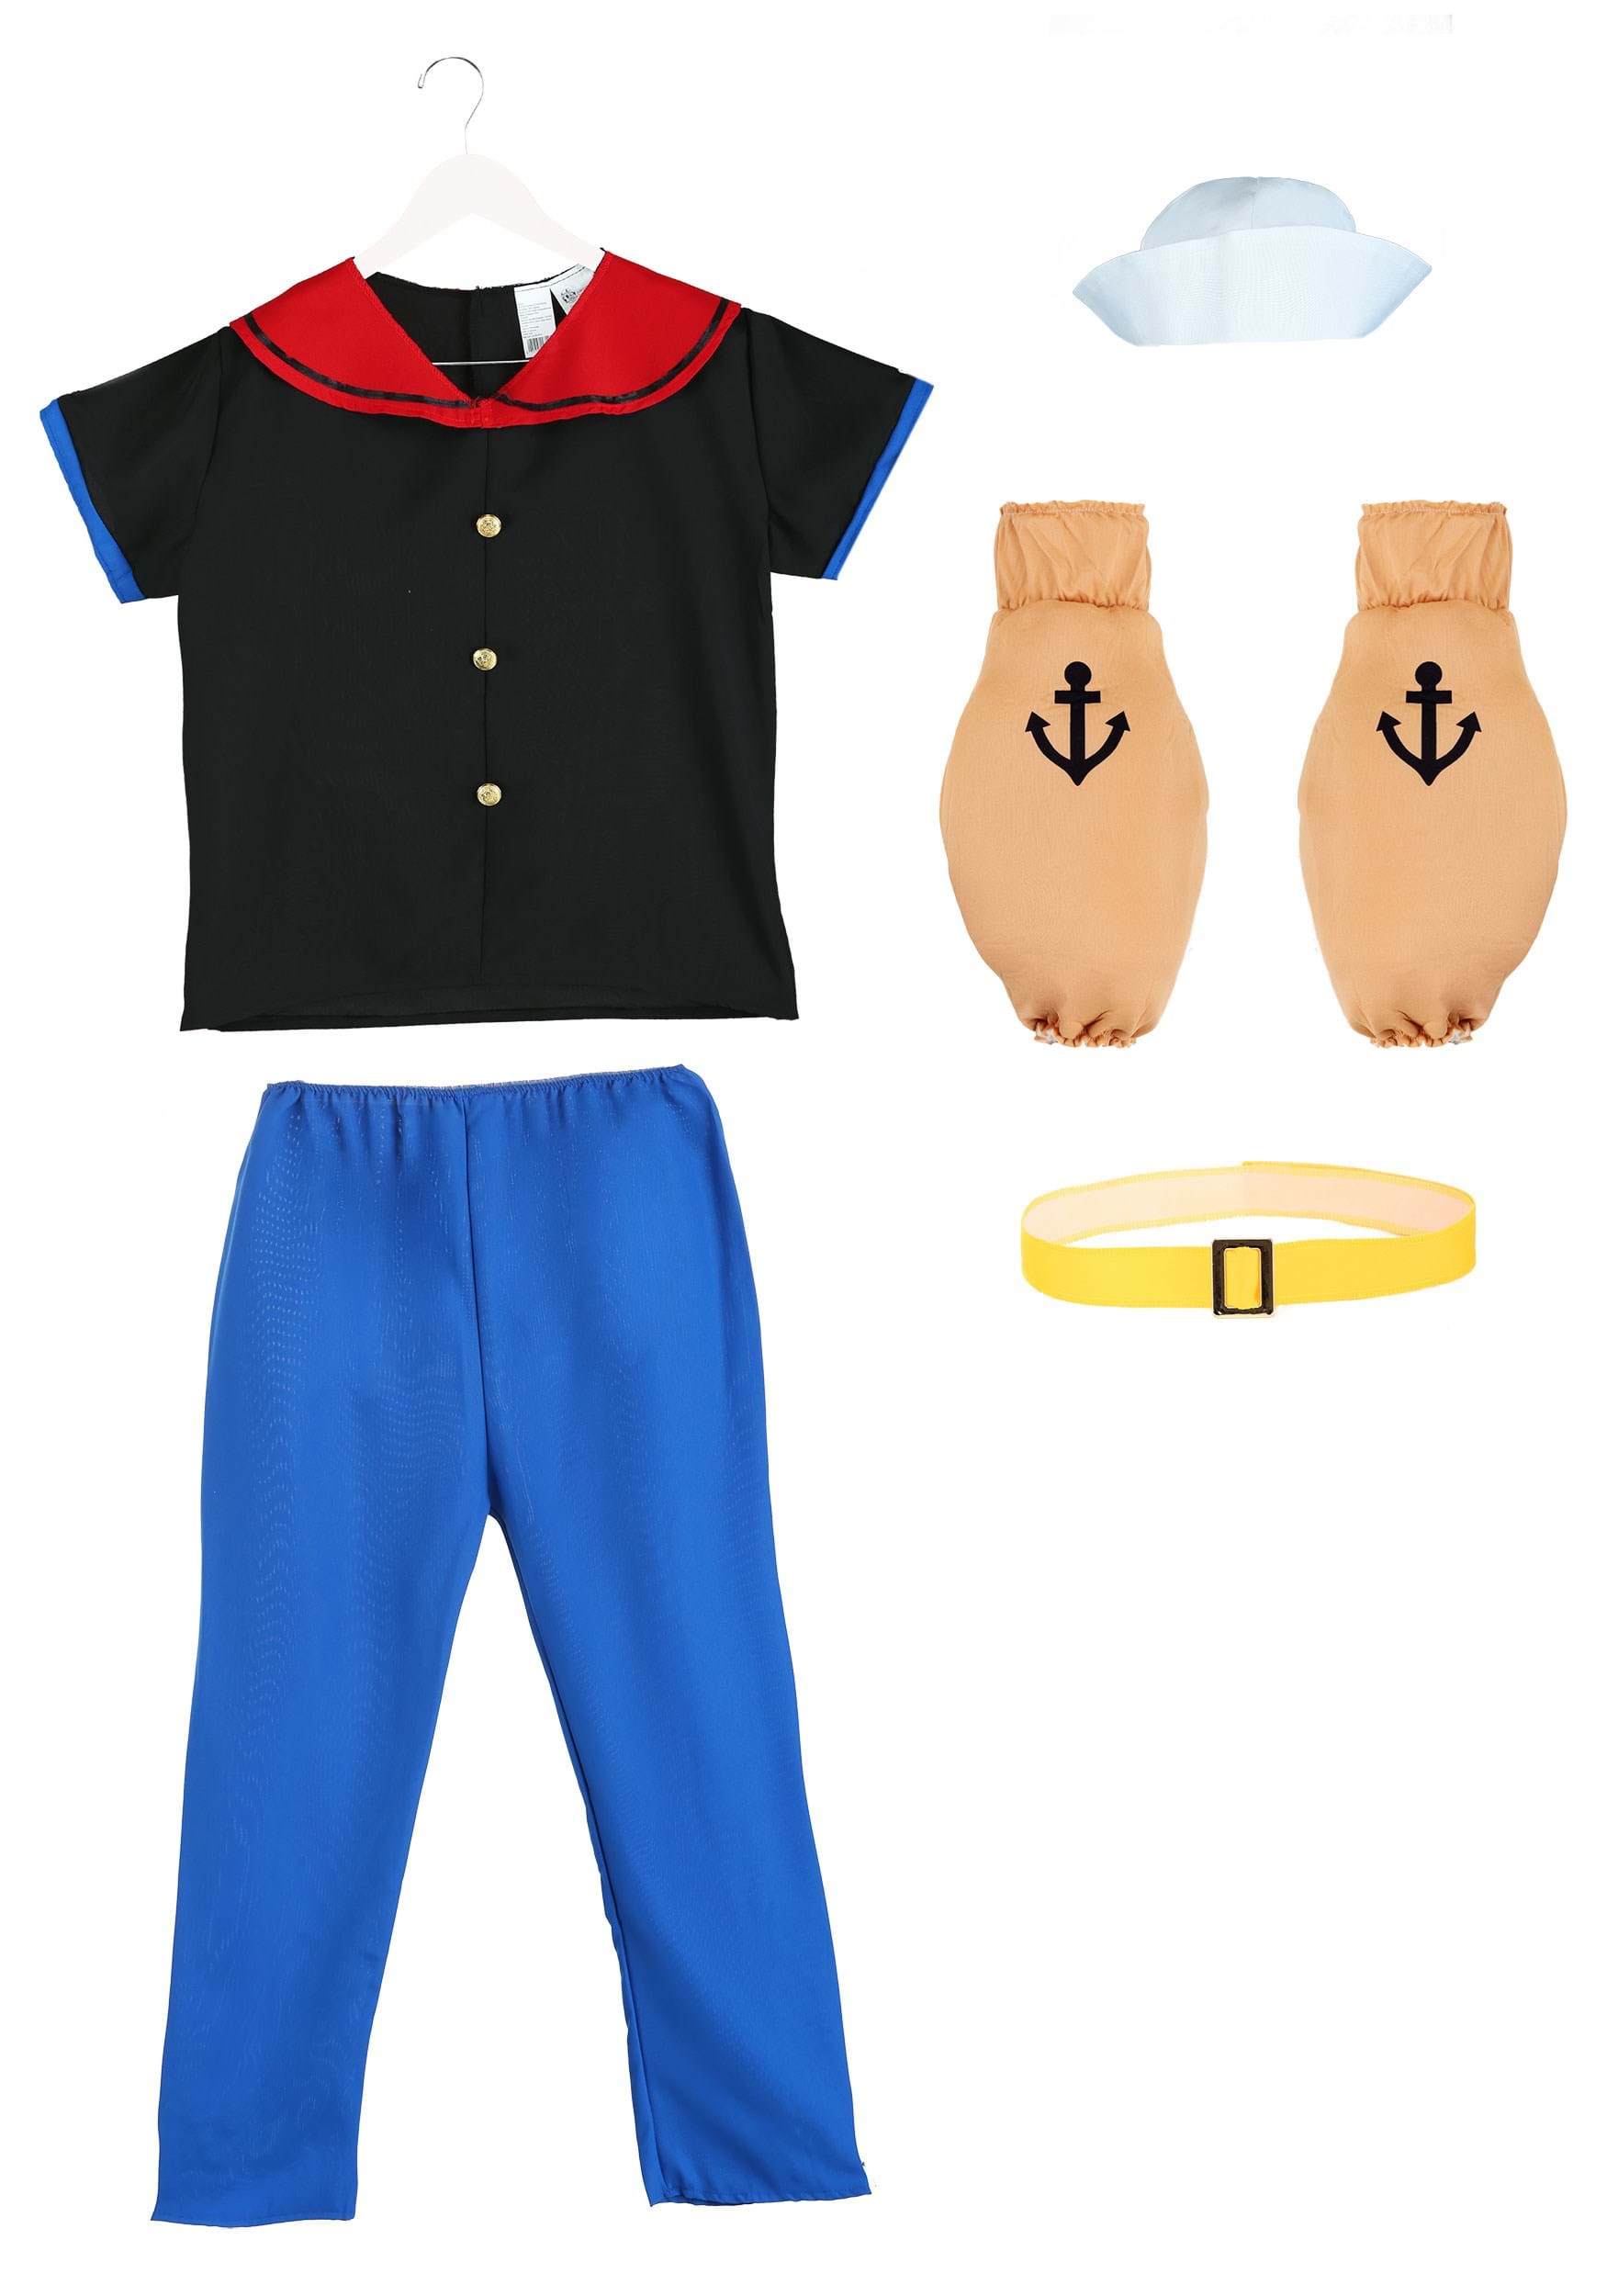 Popeye the Sailorman Costume